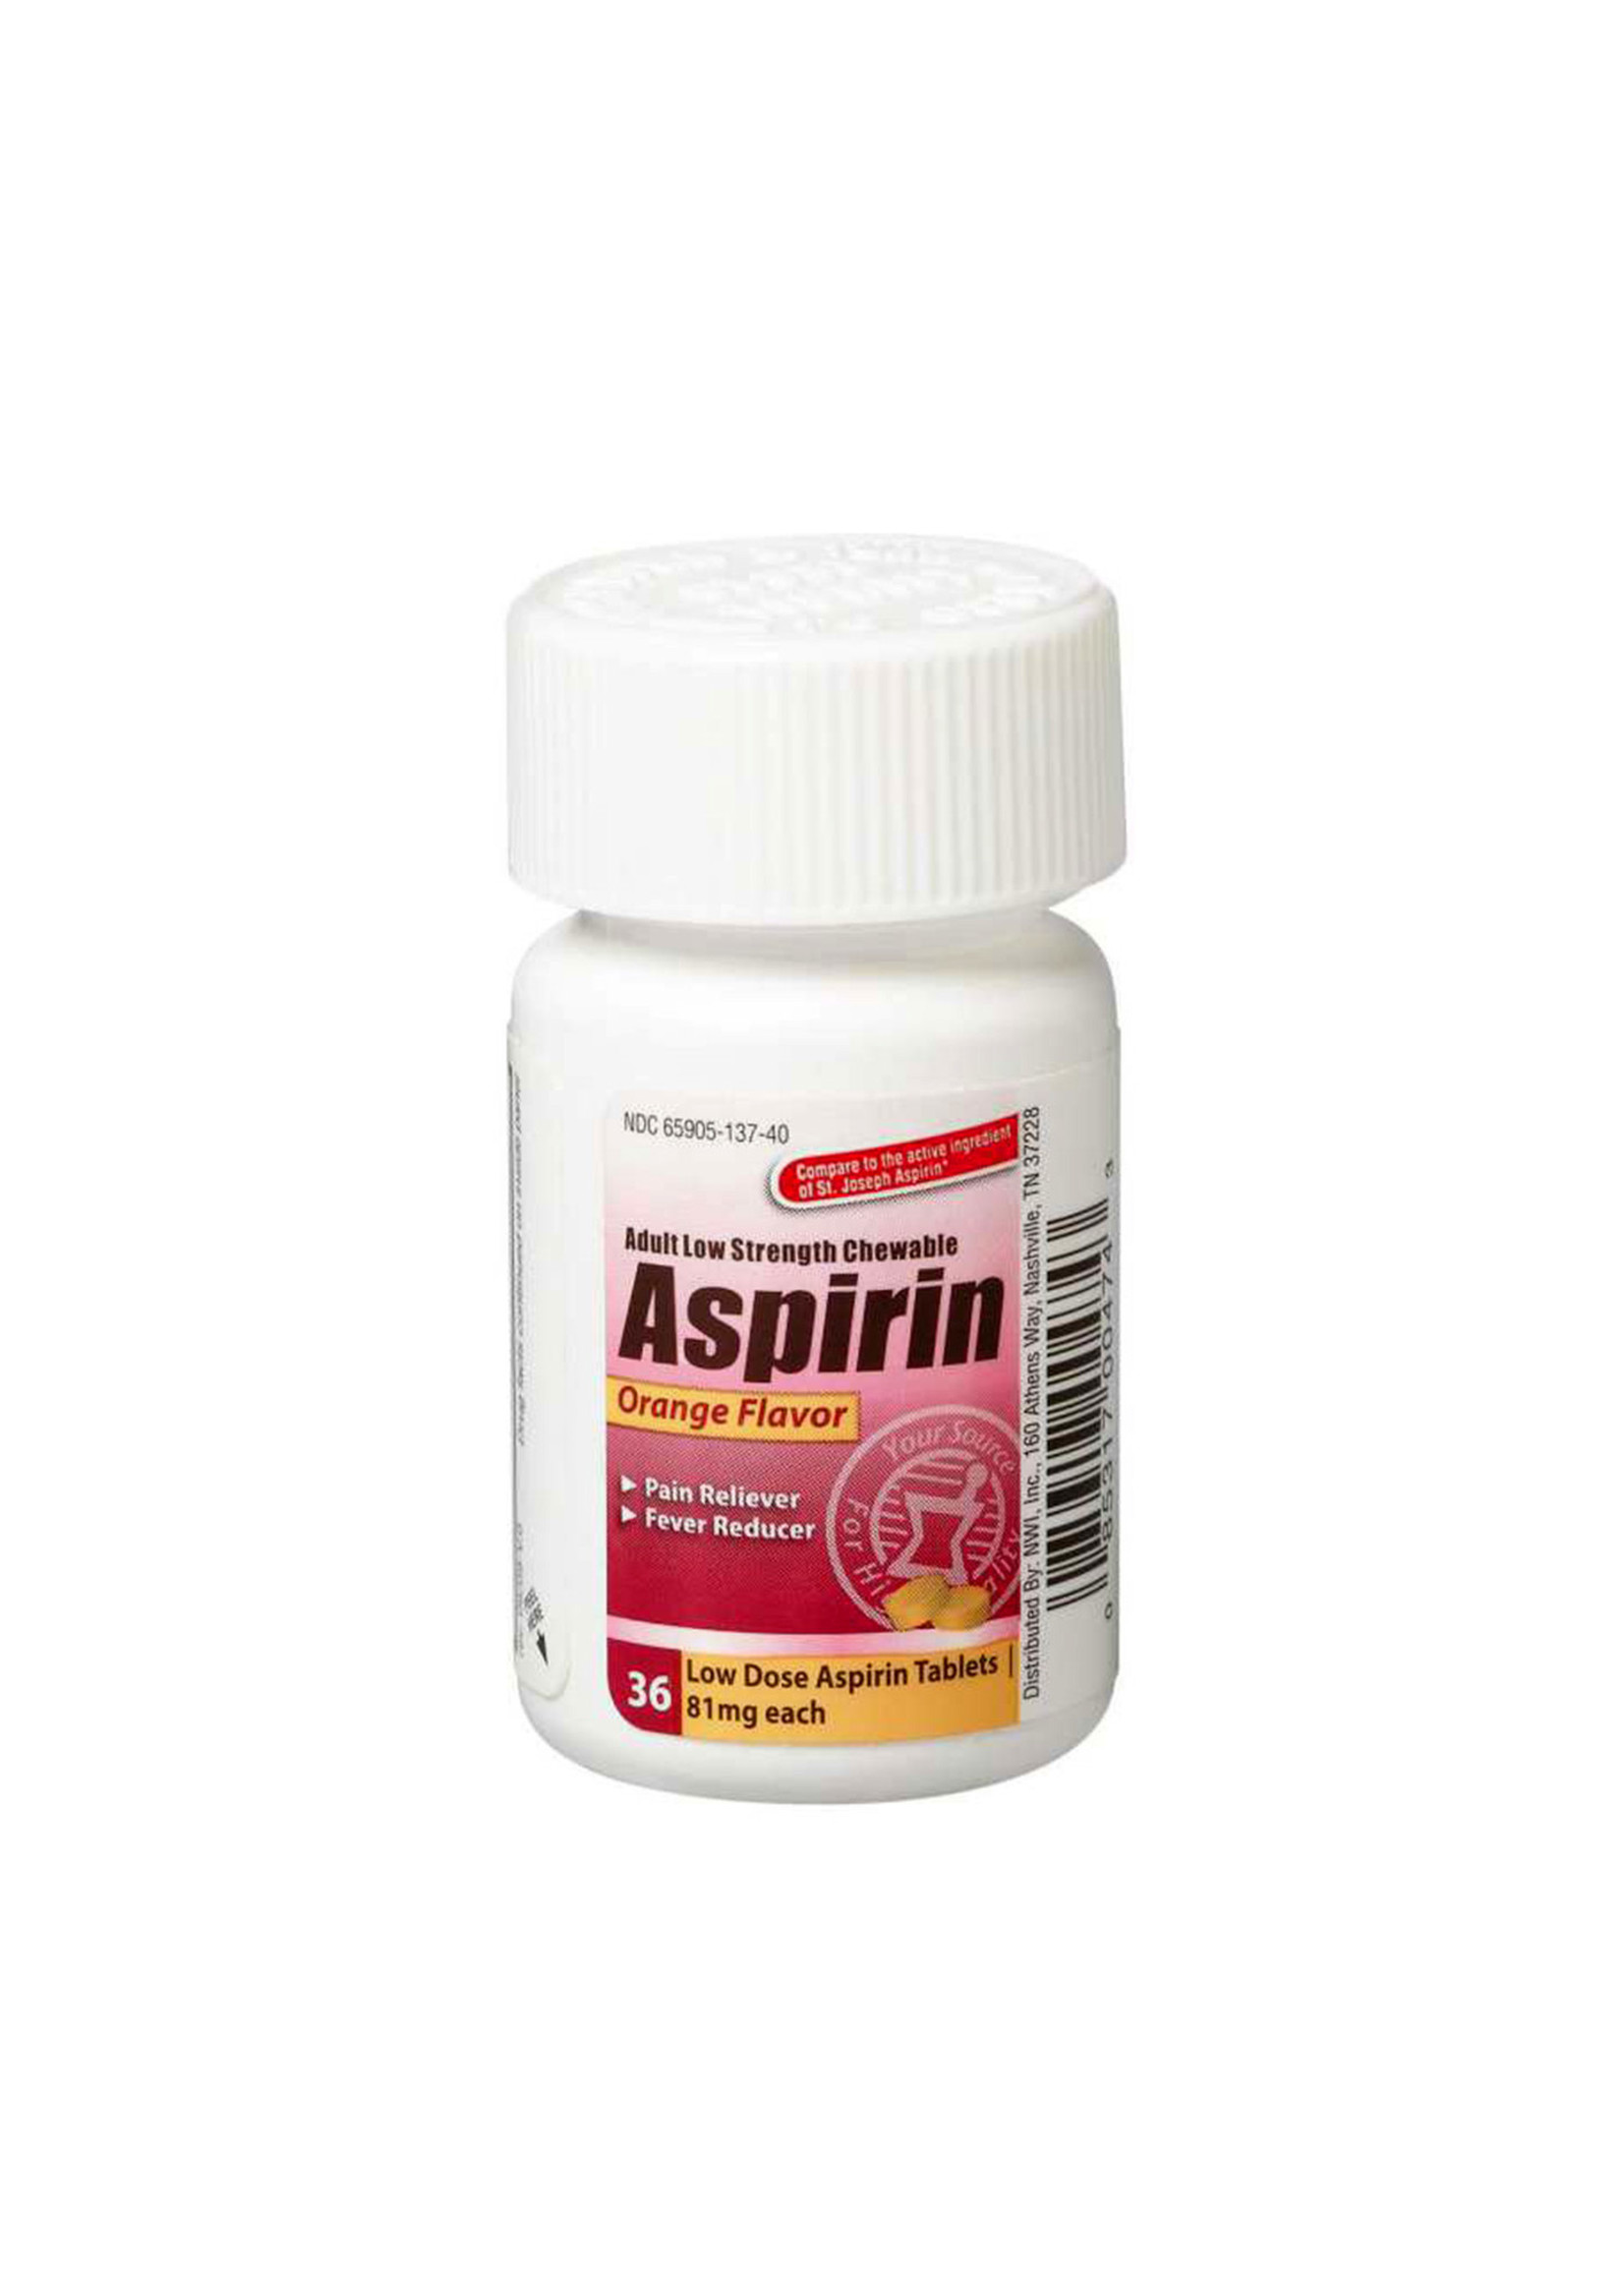 Aspirin 81mg Chewable Tablets